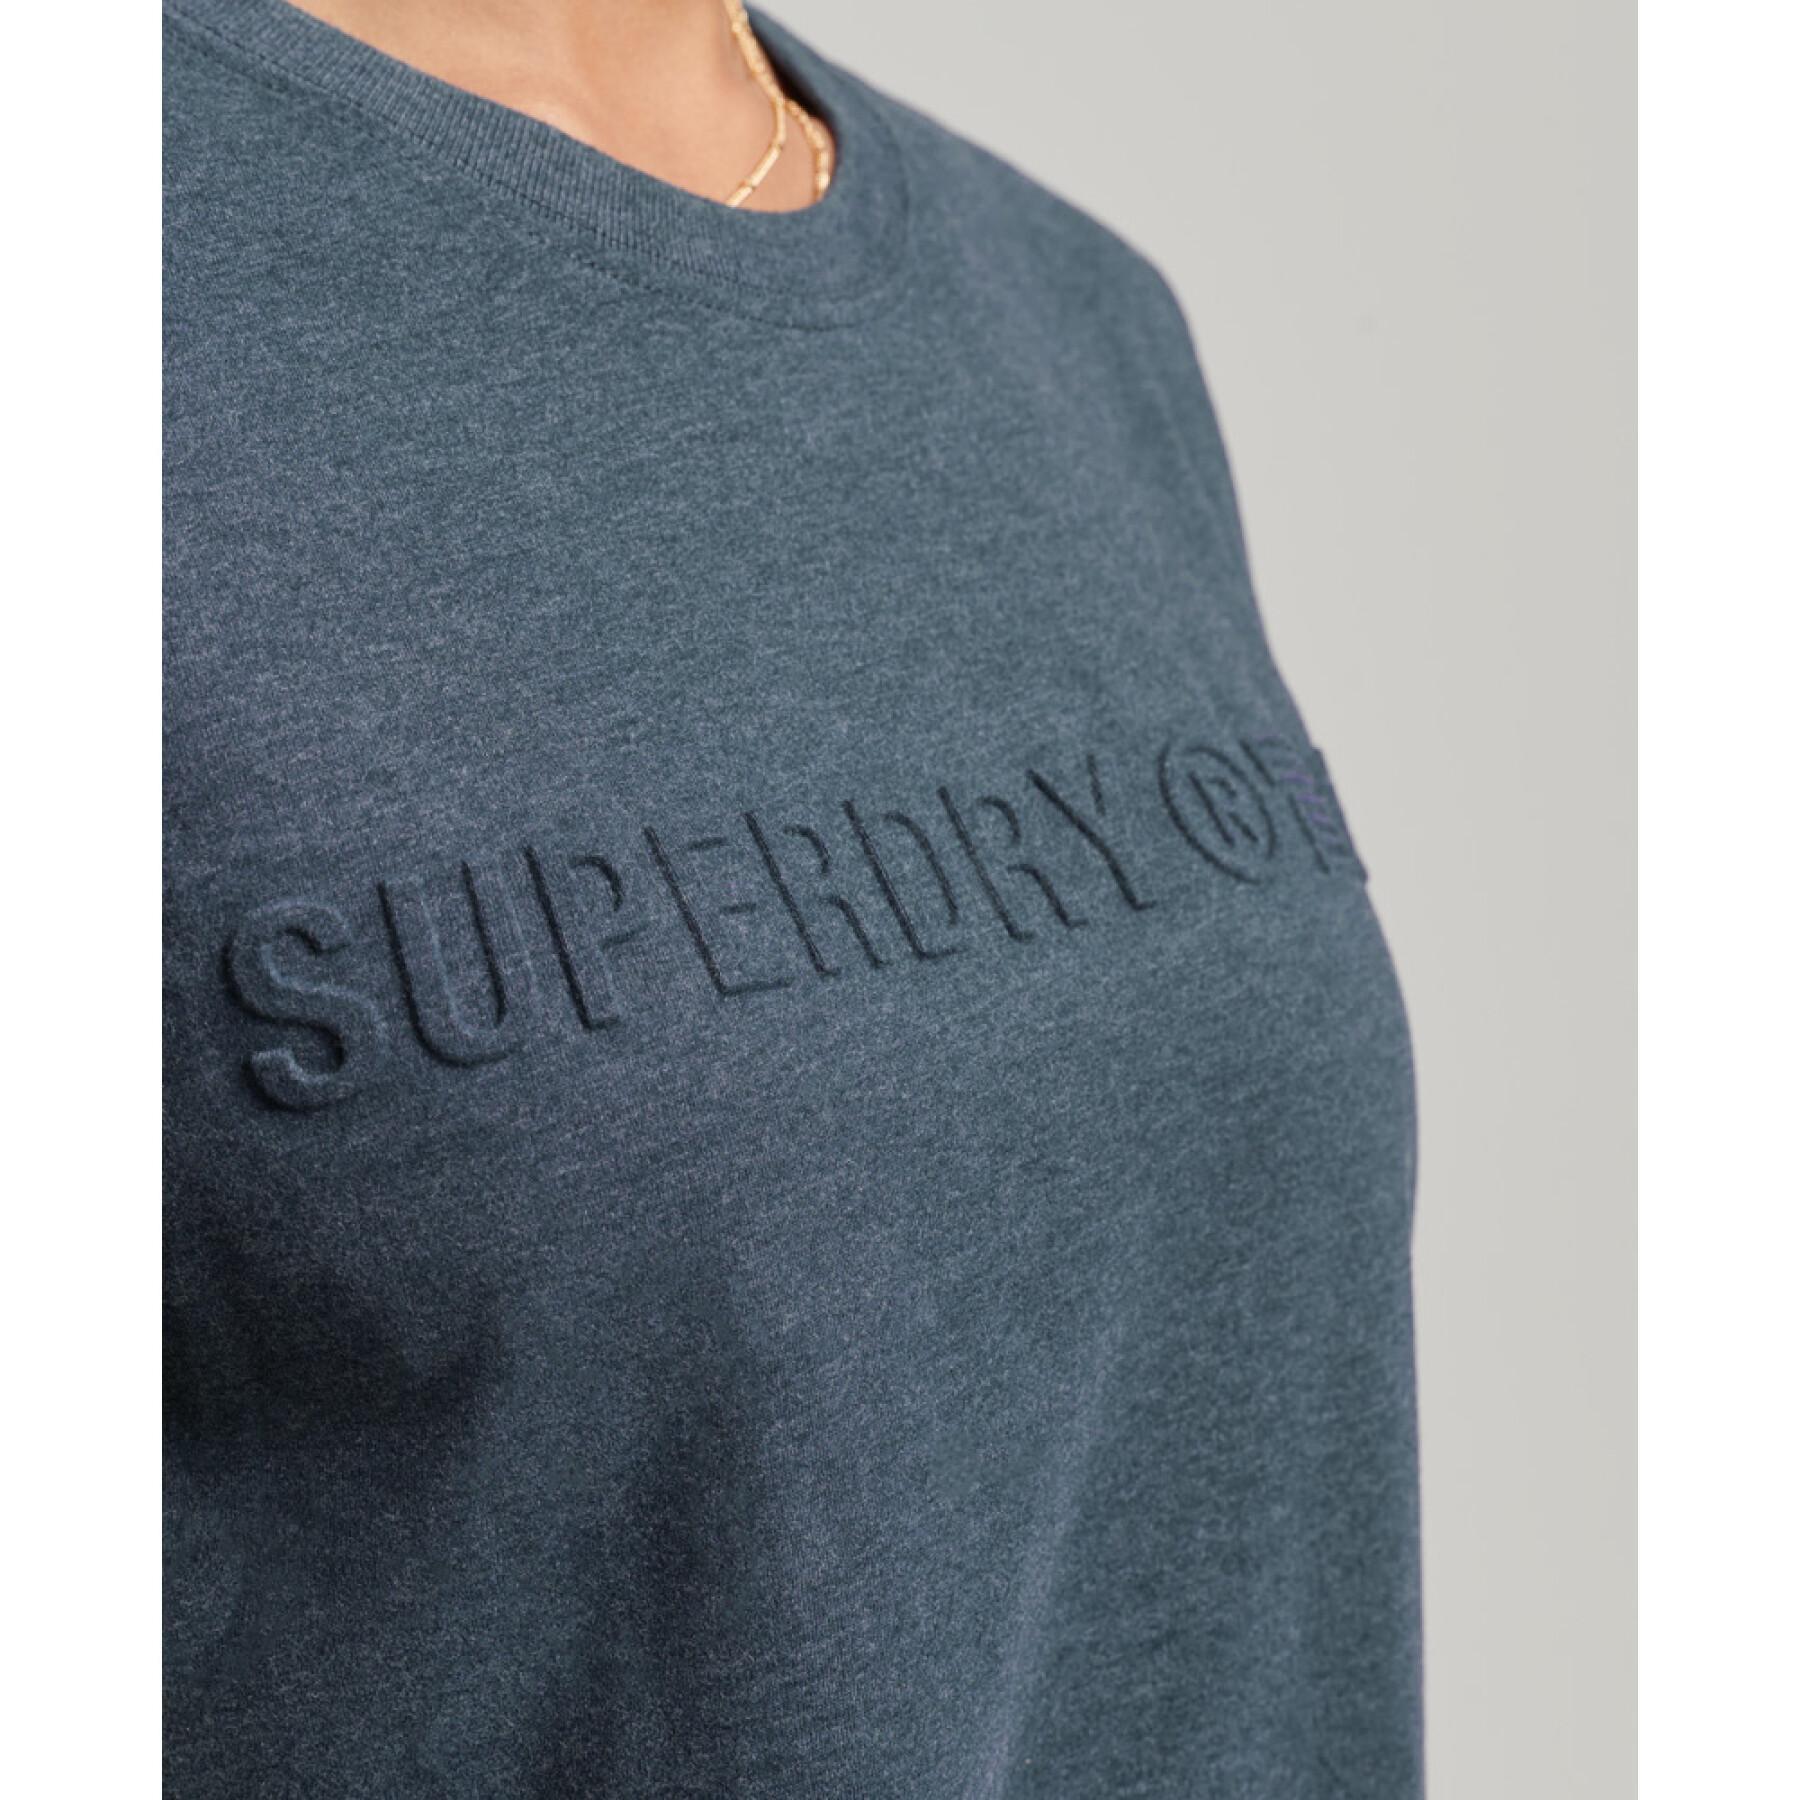 T-shirt screziata da ragazza Superdry Vintage Logo Corporate